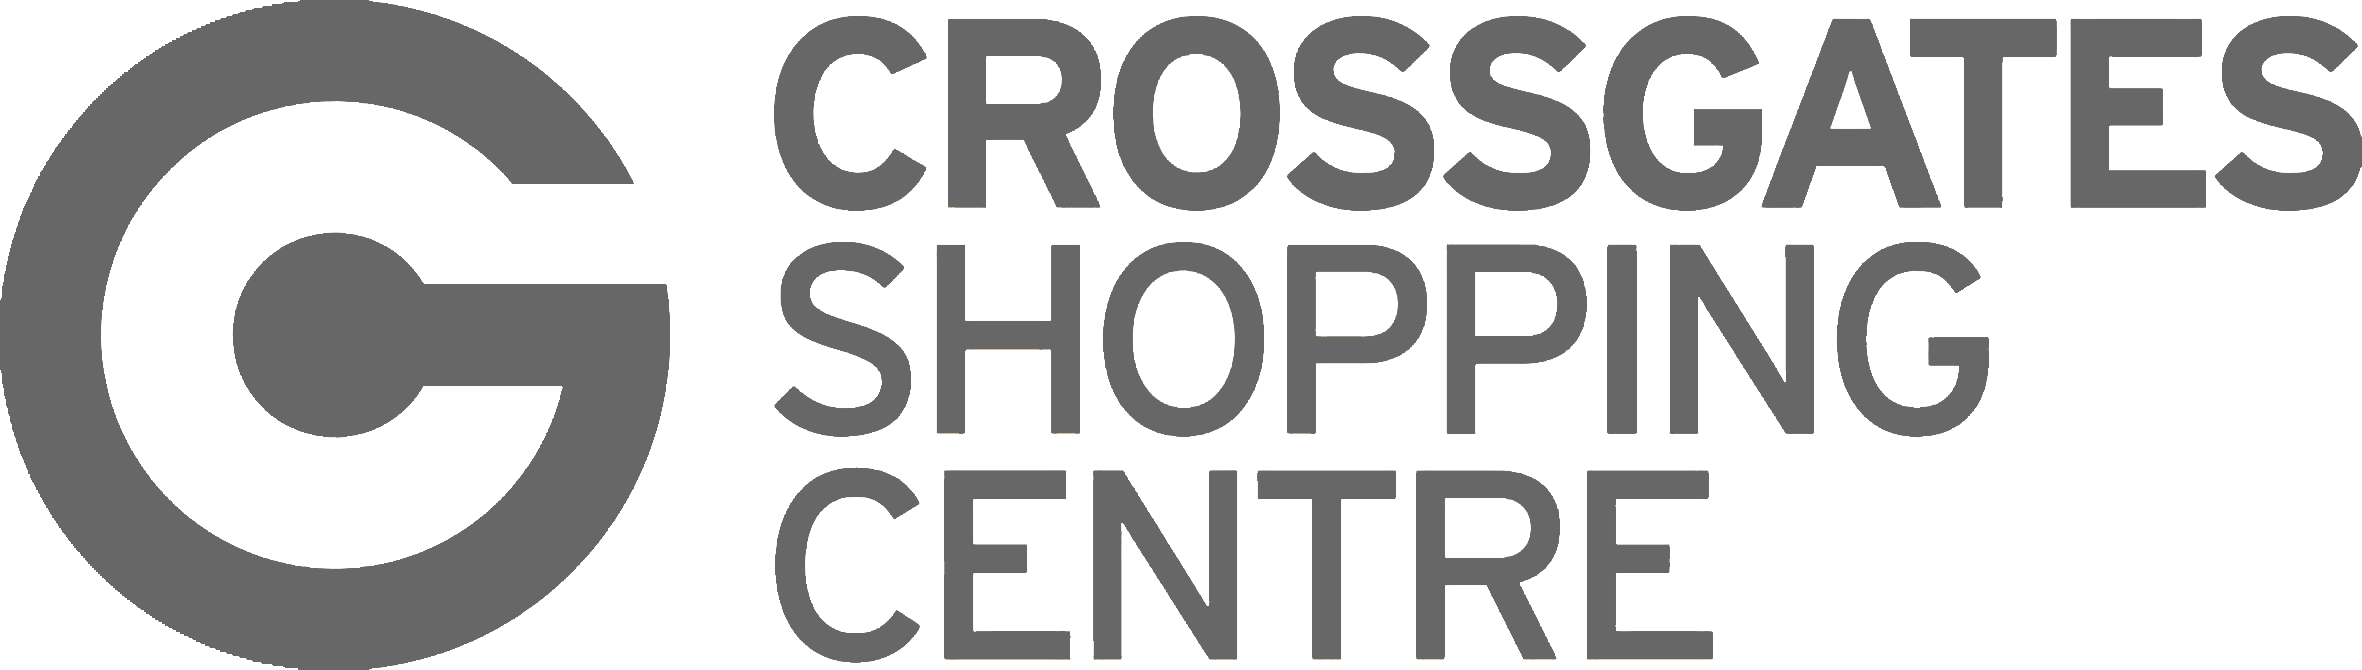 Rawstron Johnson – Crossgates Shopping Centre